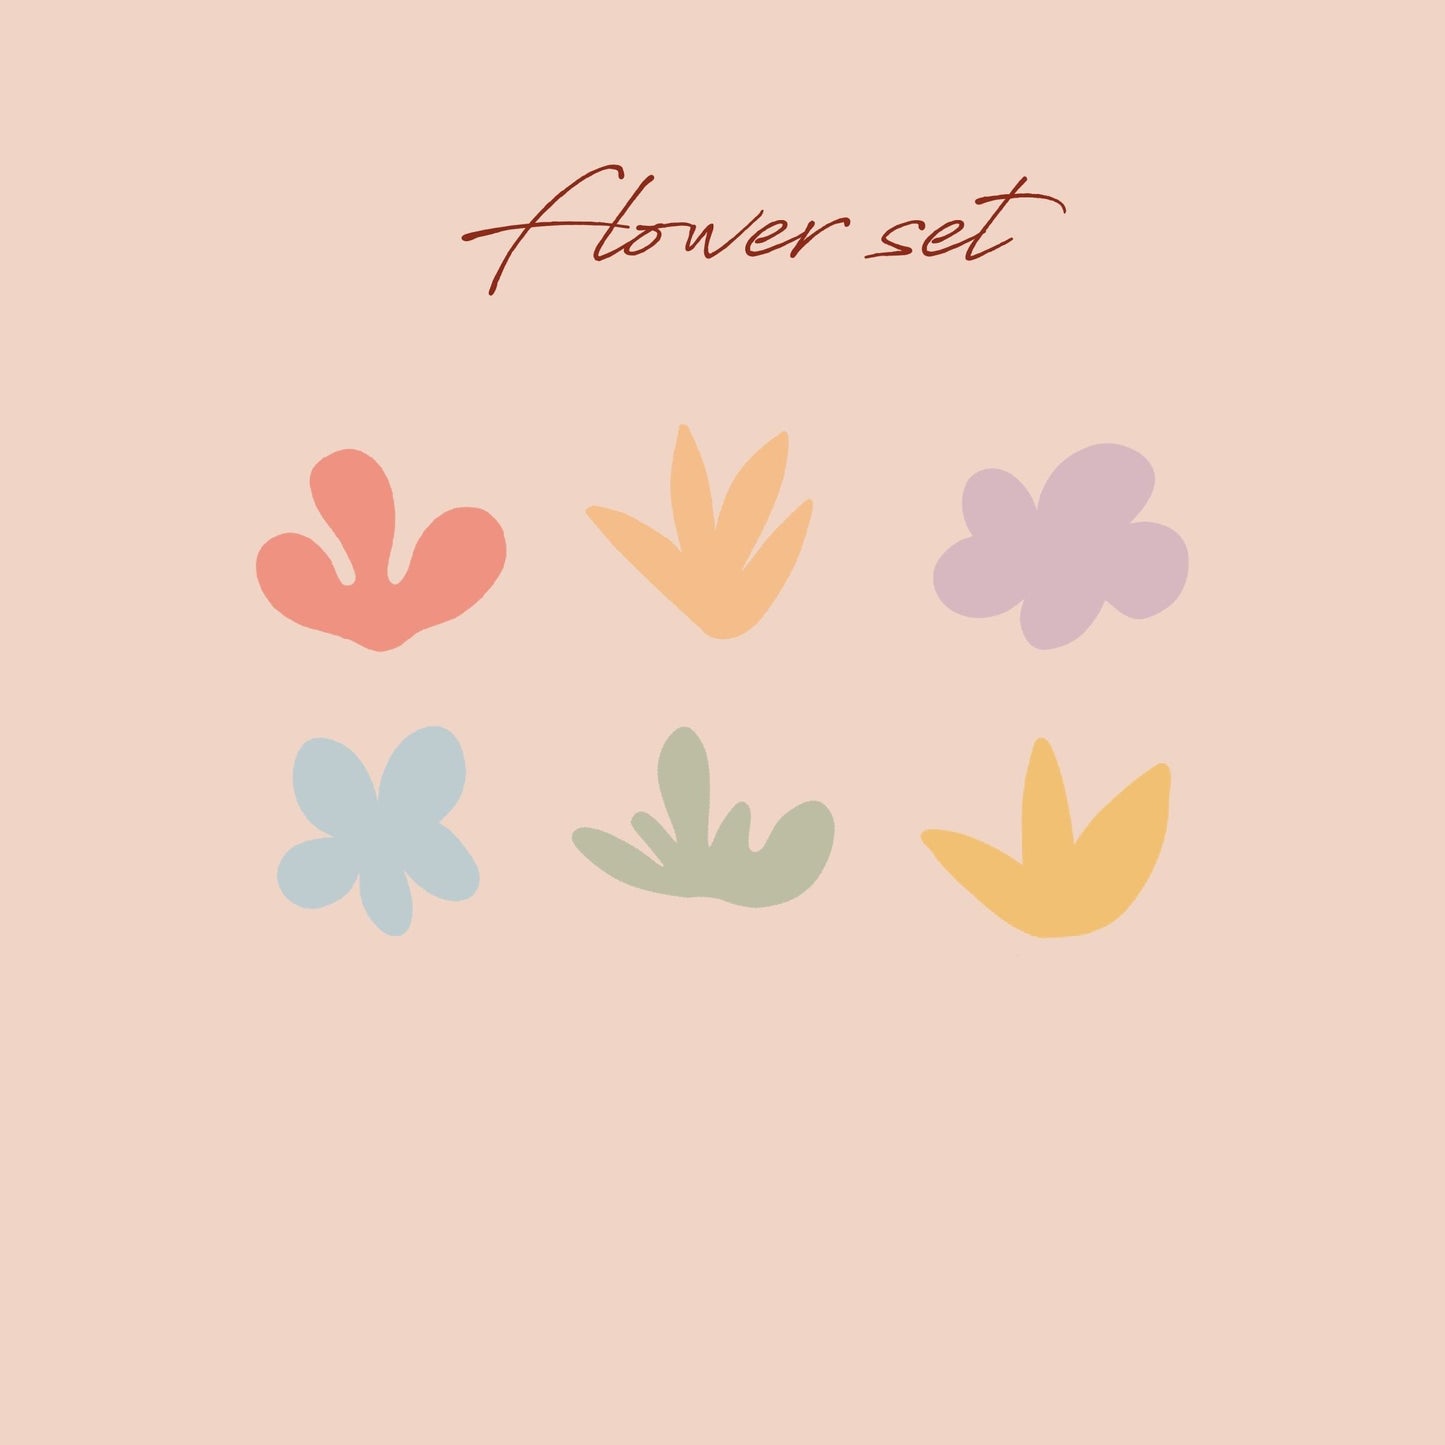 Flower set - Cutter - CLN Atelier